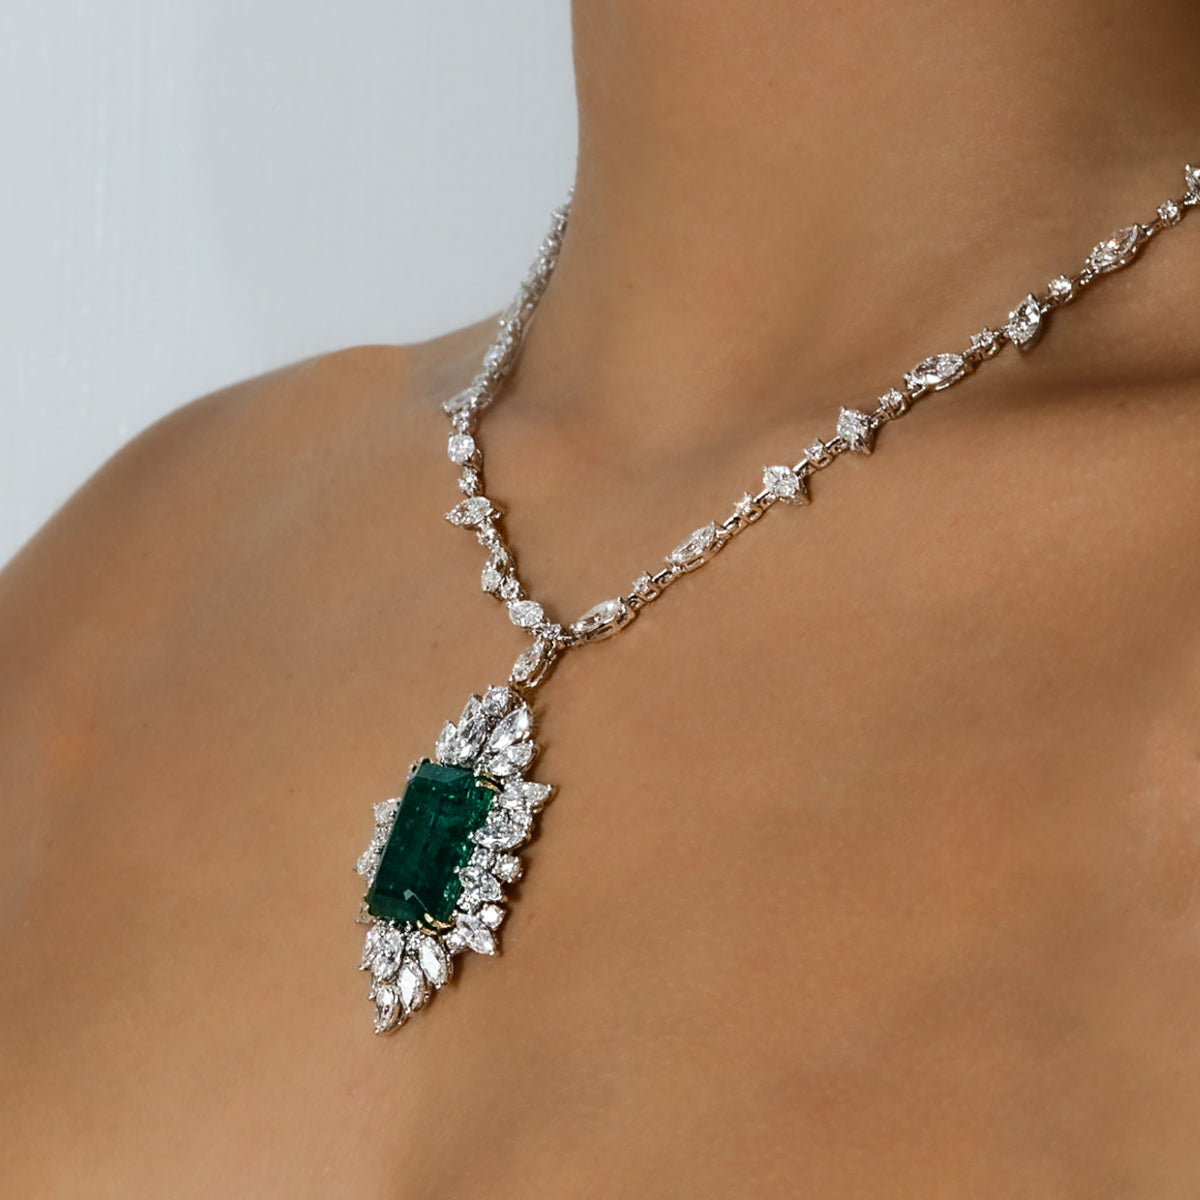 Stunning 19.42 Carat Emerald Necklace